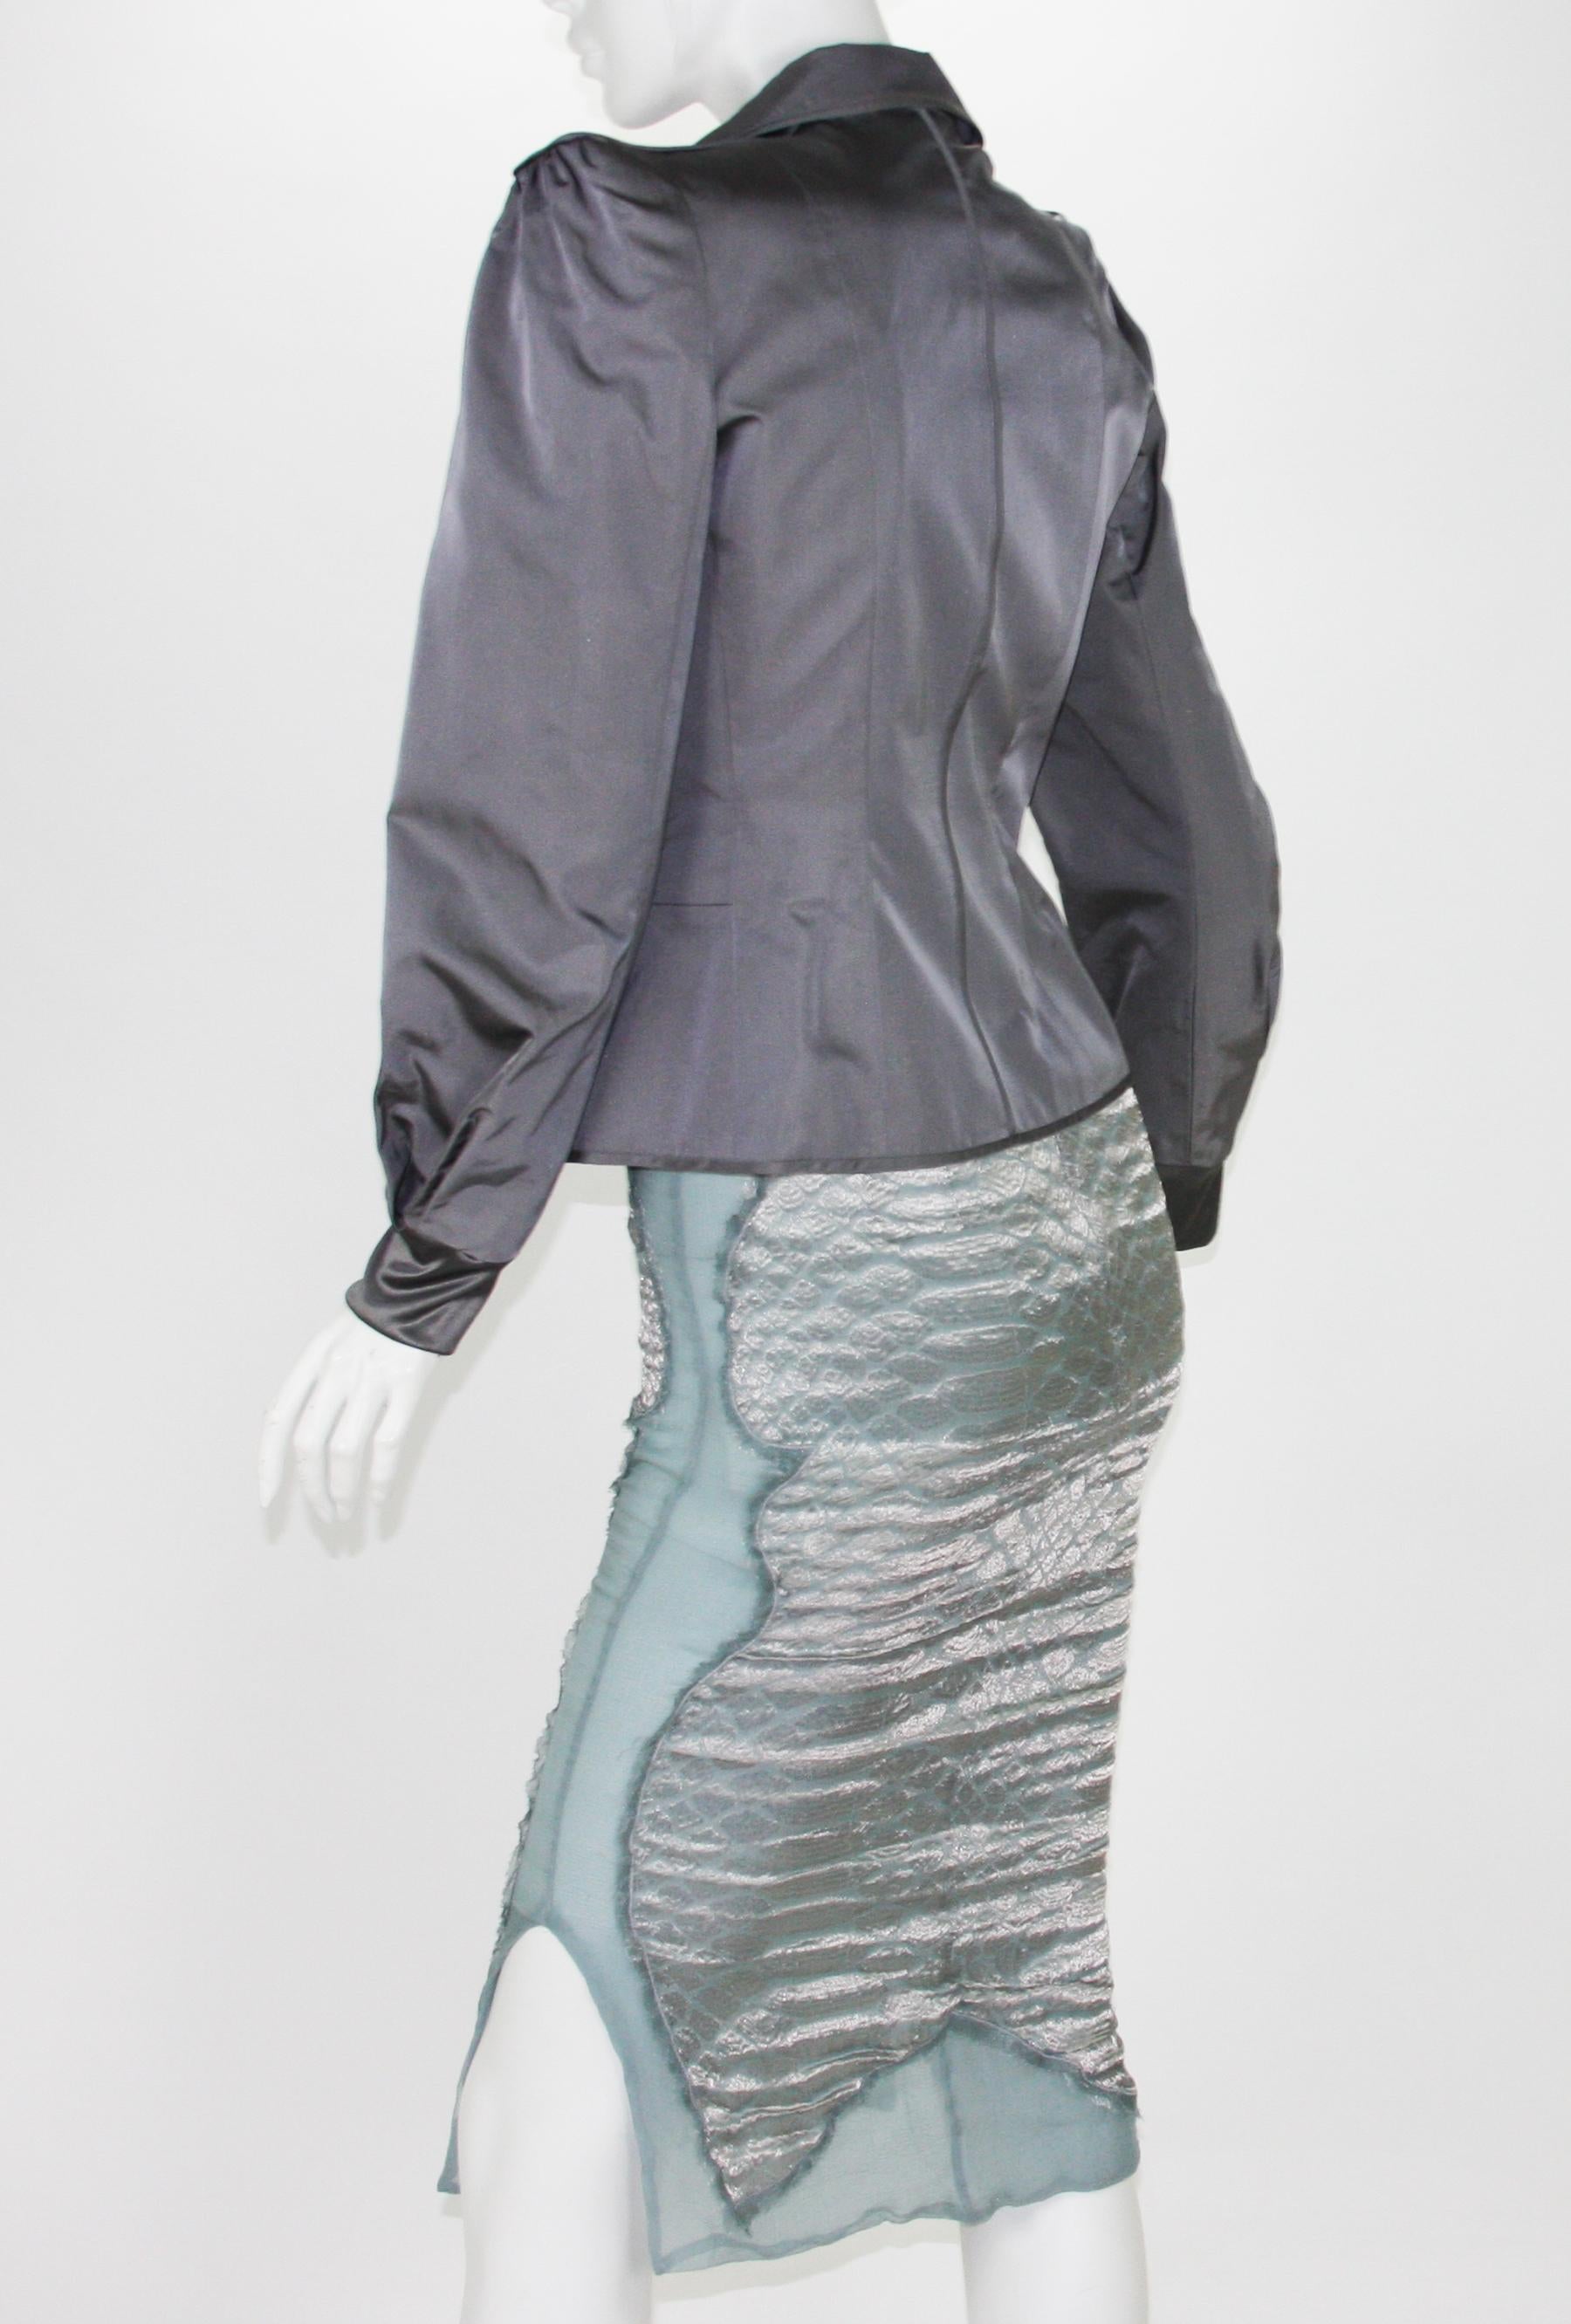 Tom Ford for Yves Saint Laurent F/W 2004 Silk Pagoda Jacket Skirt Suit Fr 38 - 6 For Sale 1